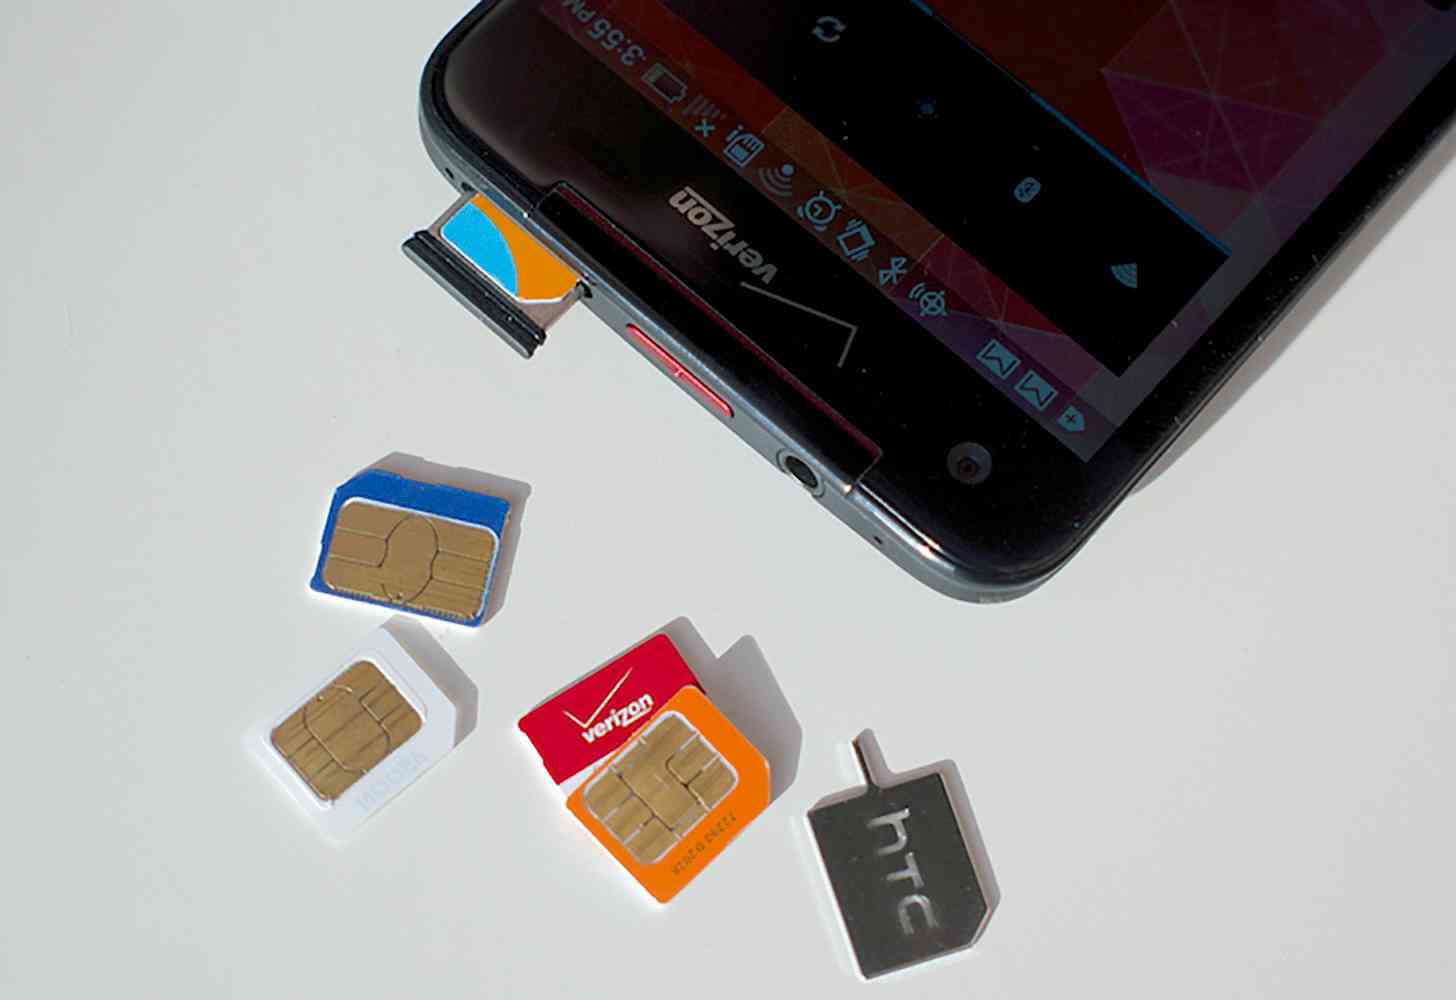 HTC DROID DNA Verizon, AT&T SIM cards